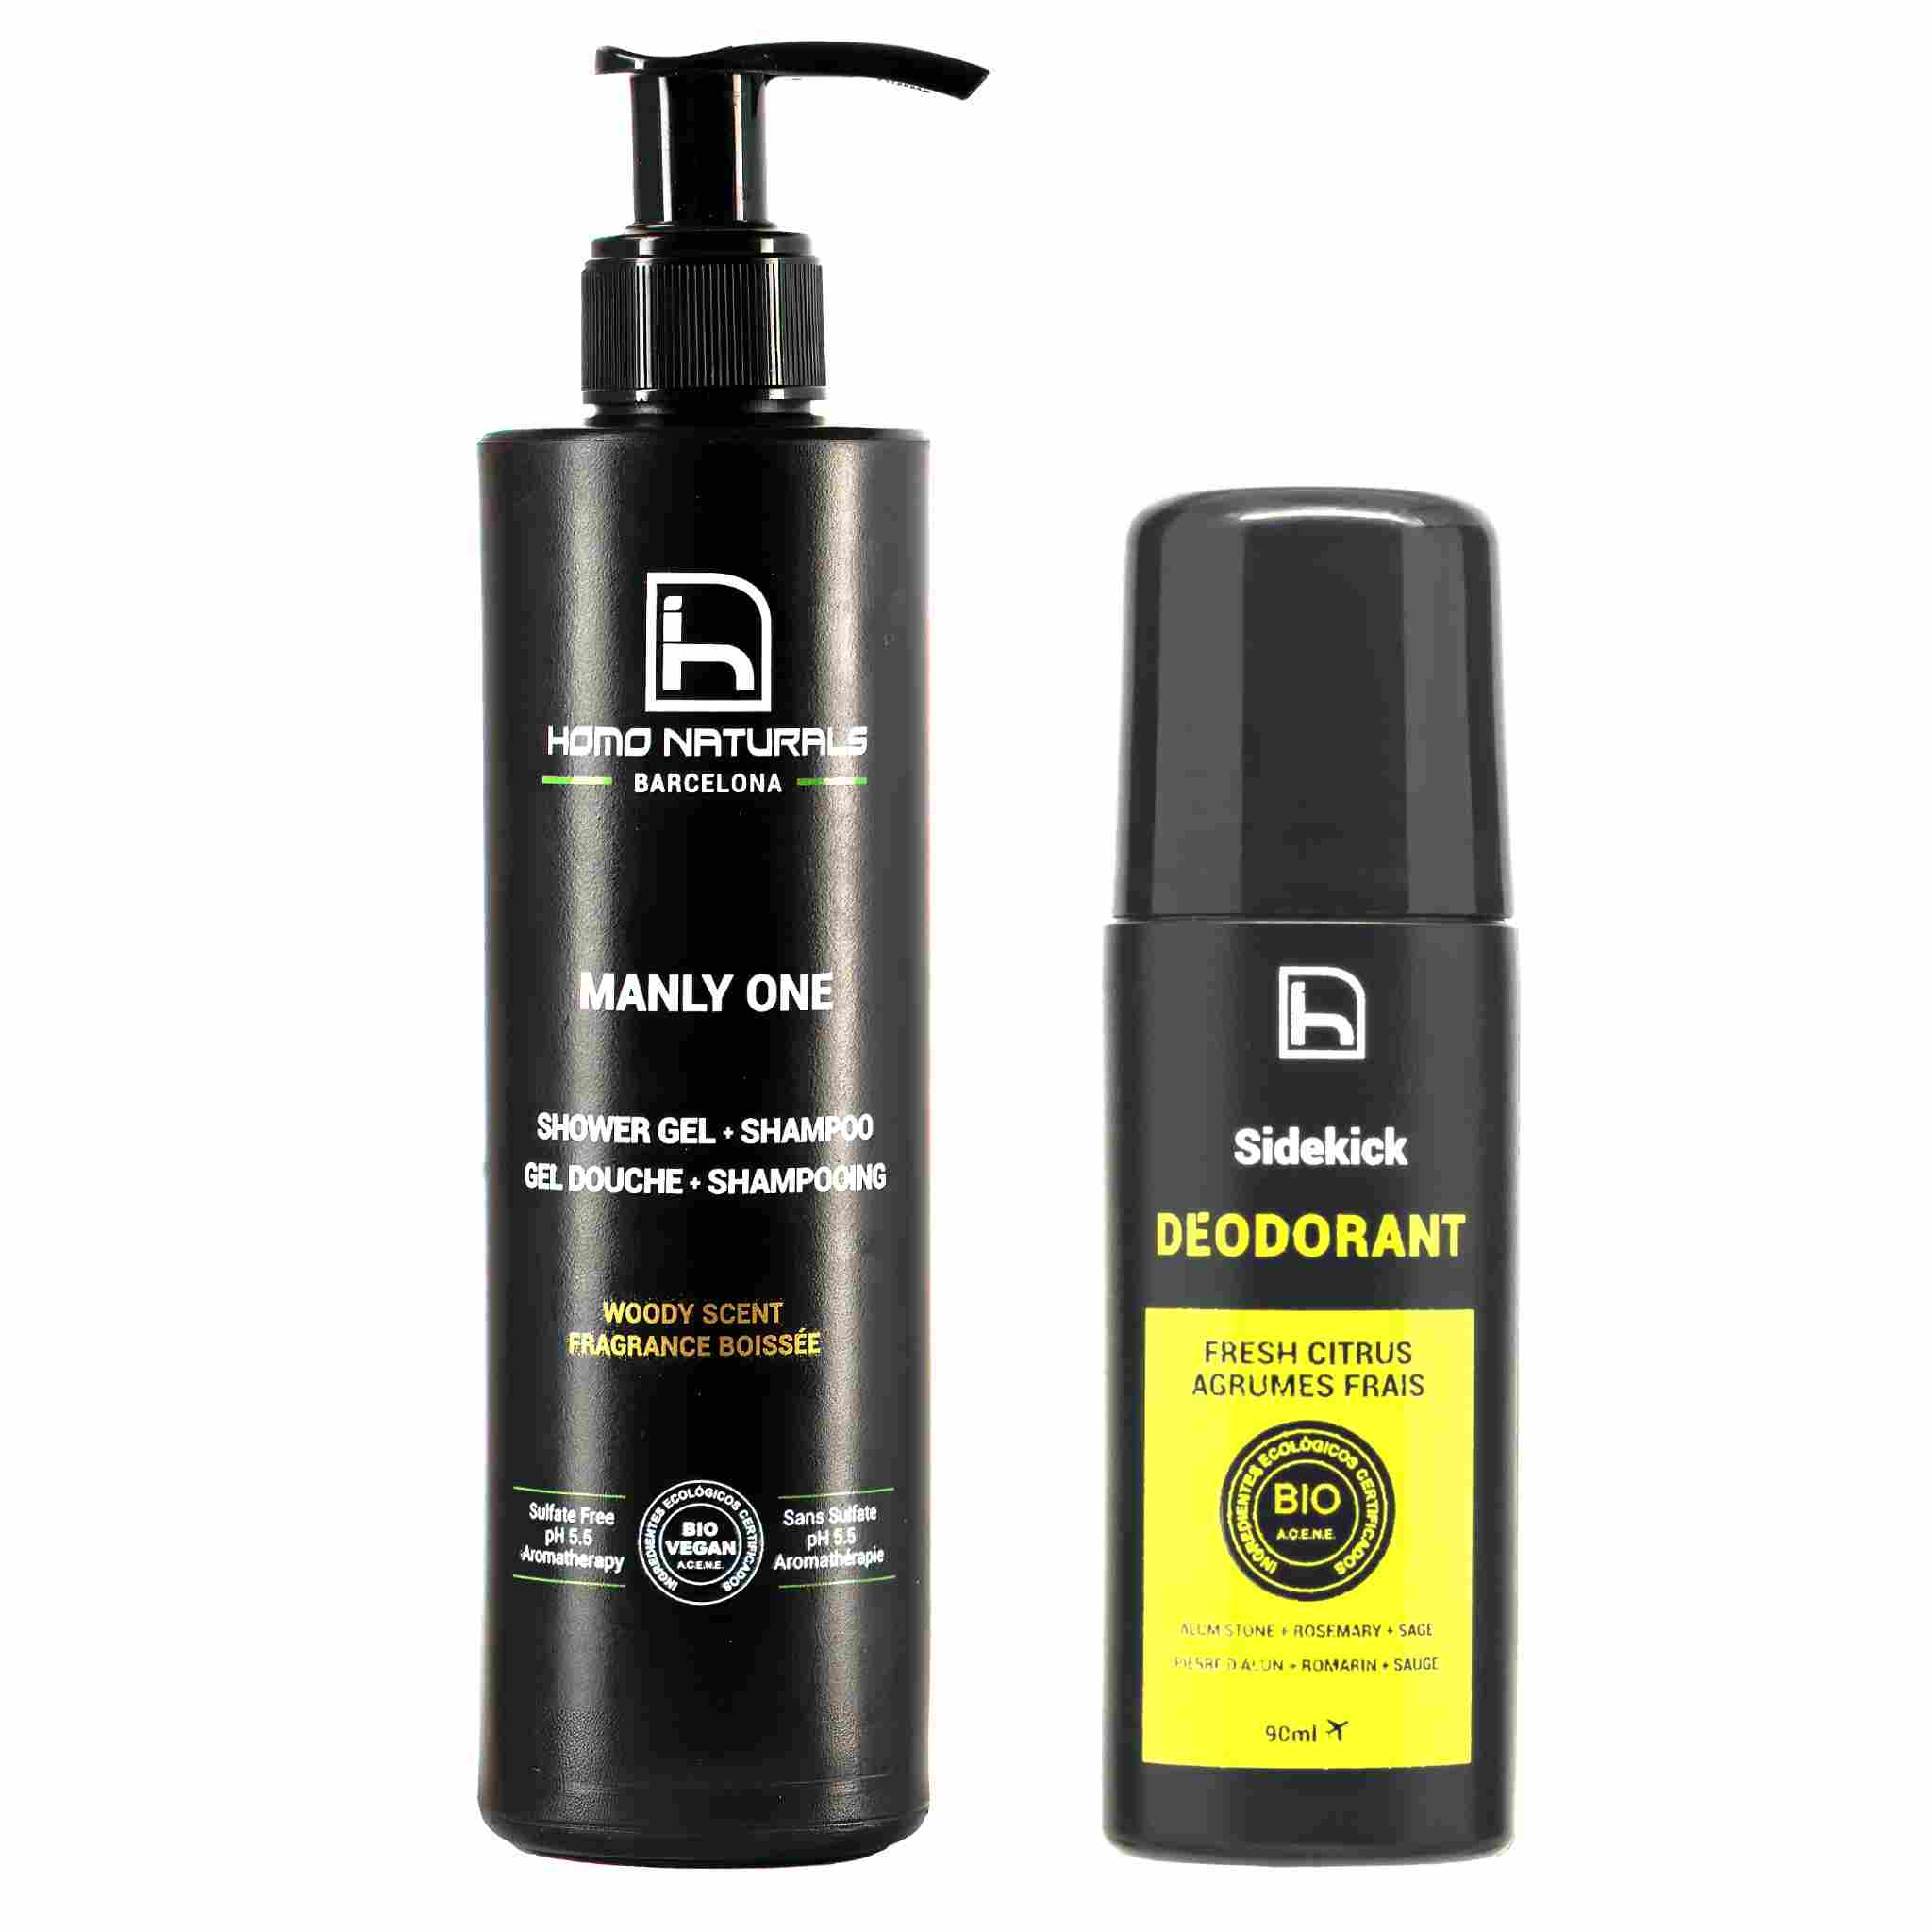 Natural deodorant for men and bio shower gel